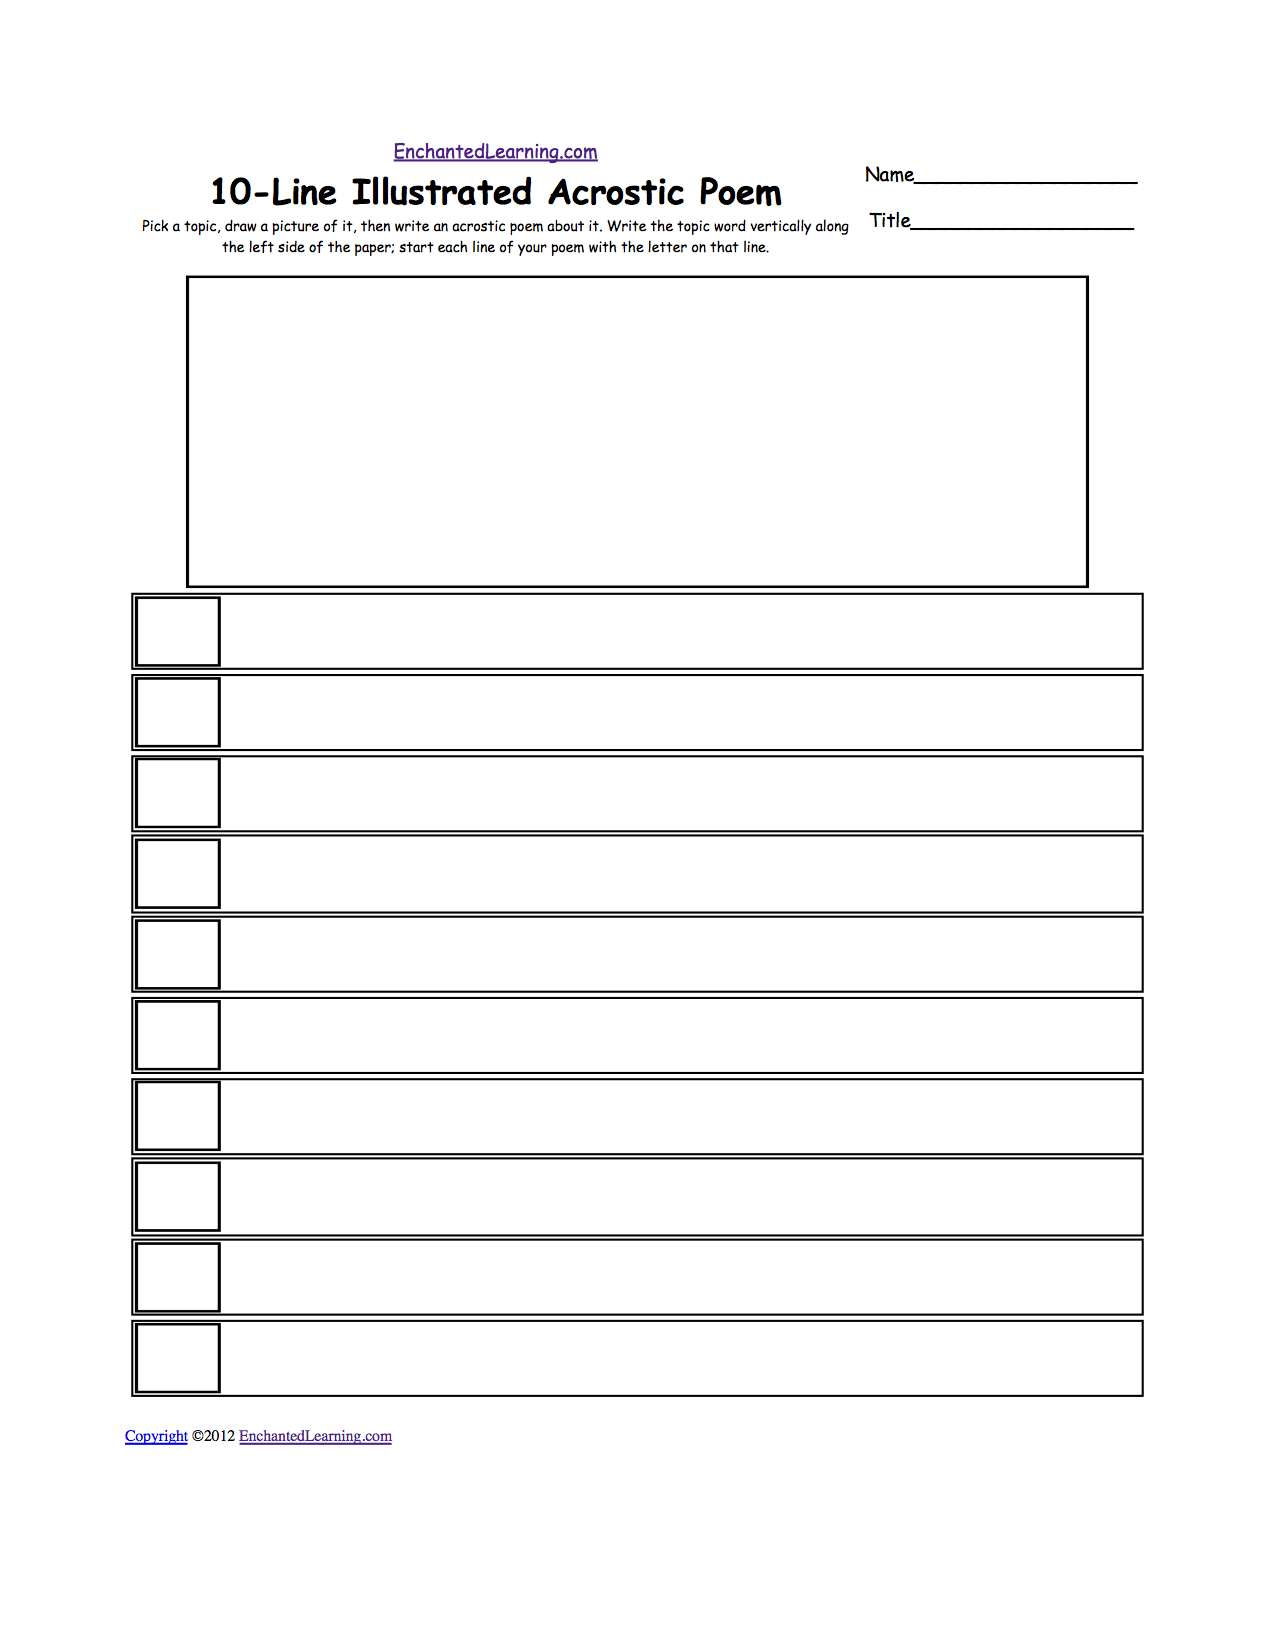 blank-illustrated-acrostic-poem-worksheets-worksheet-printout